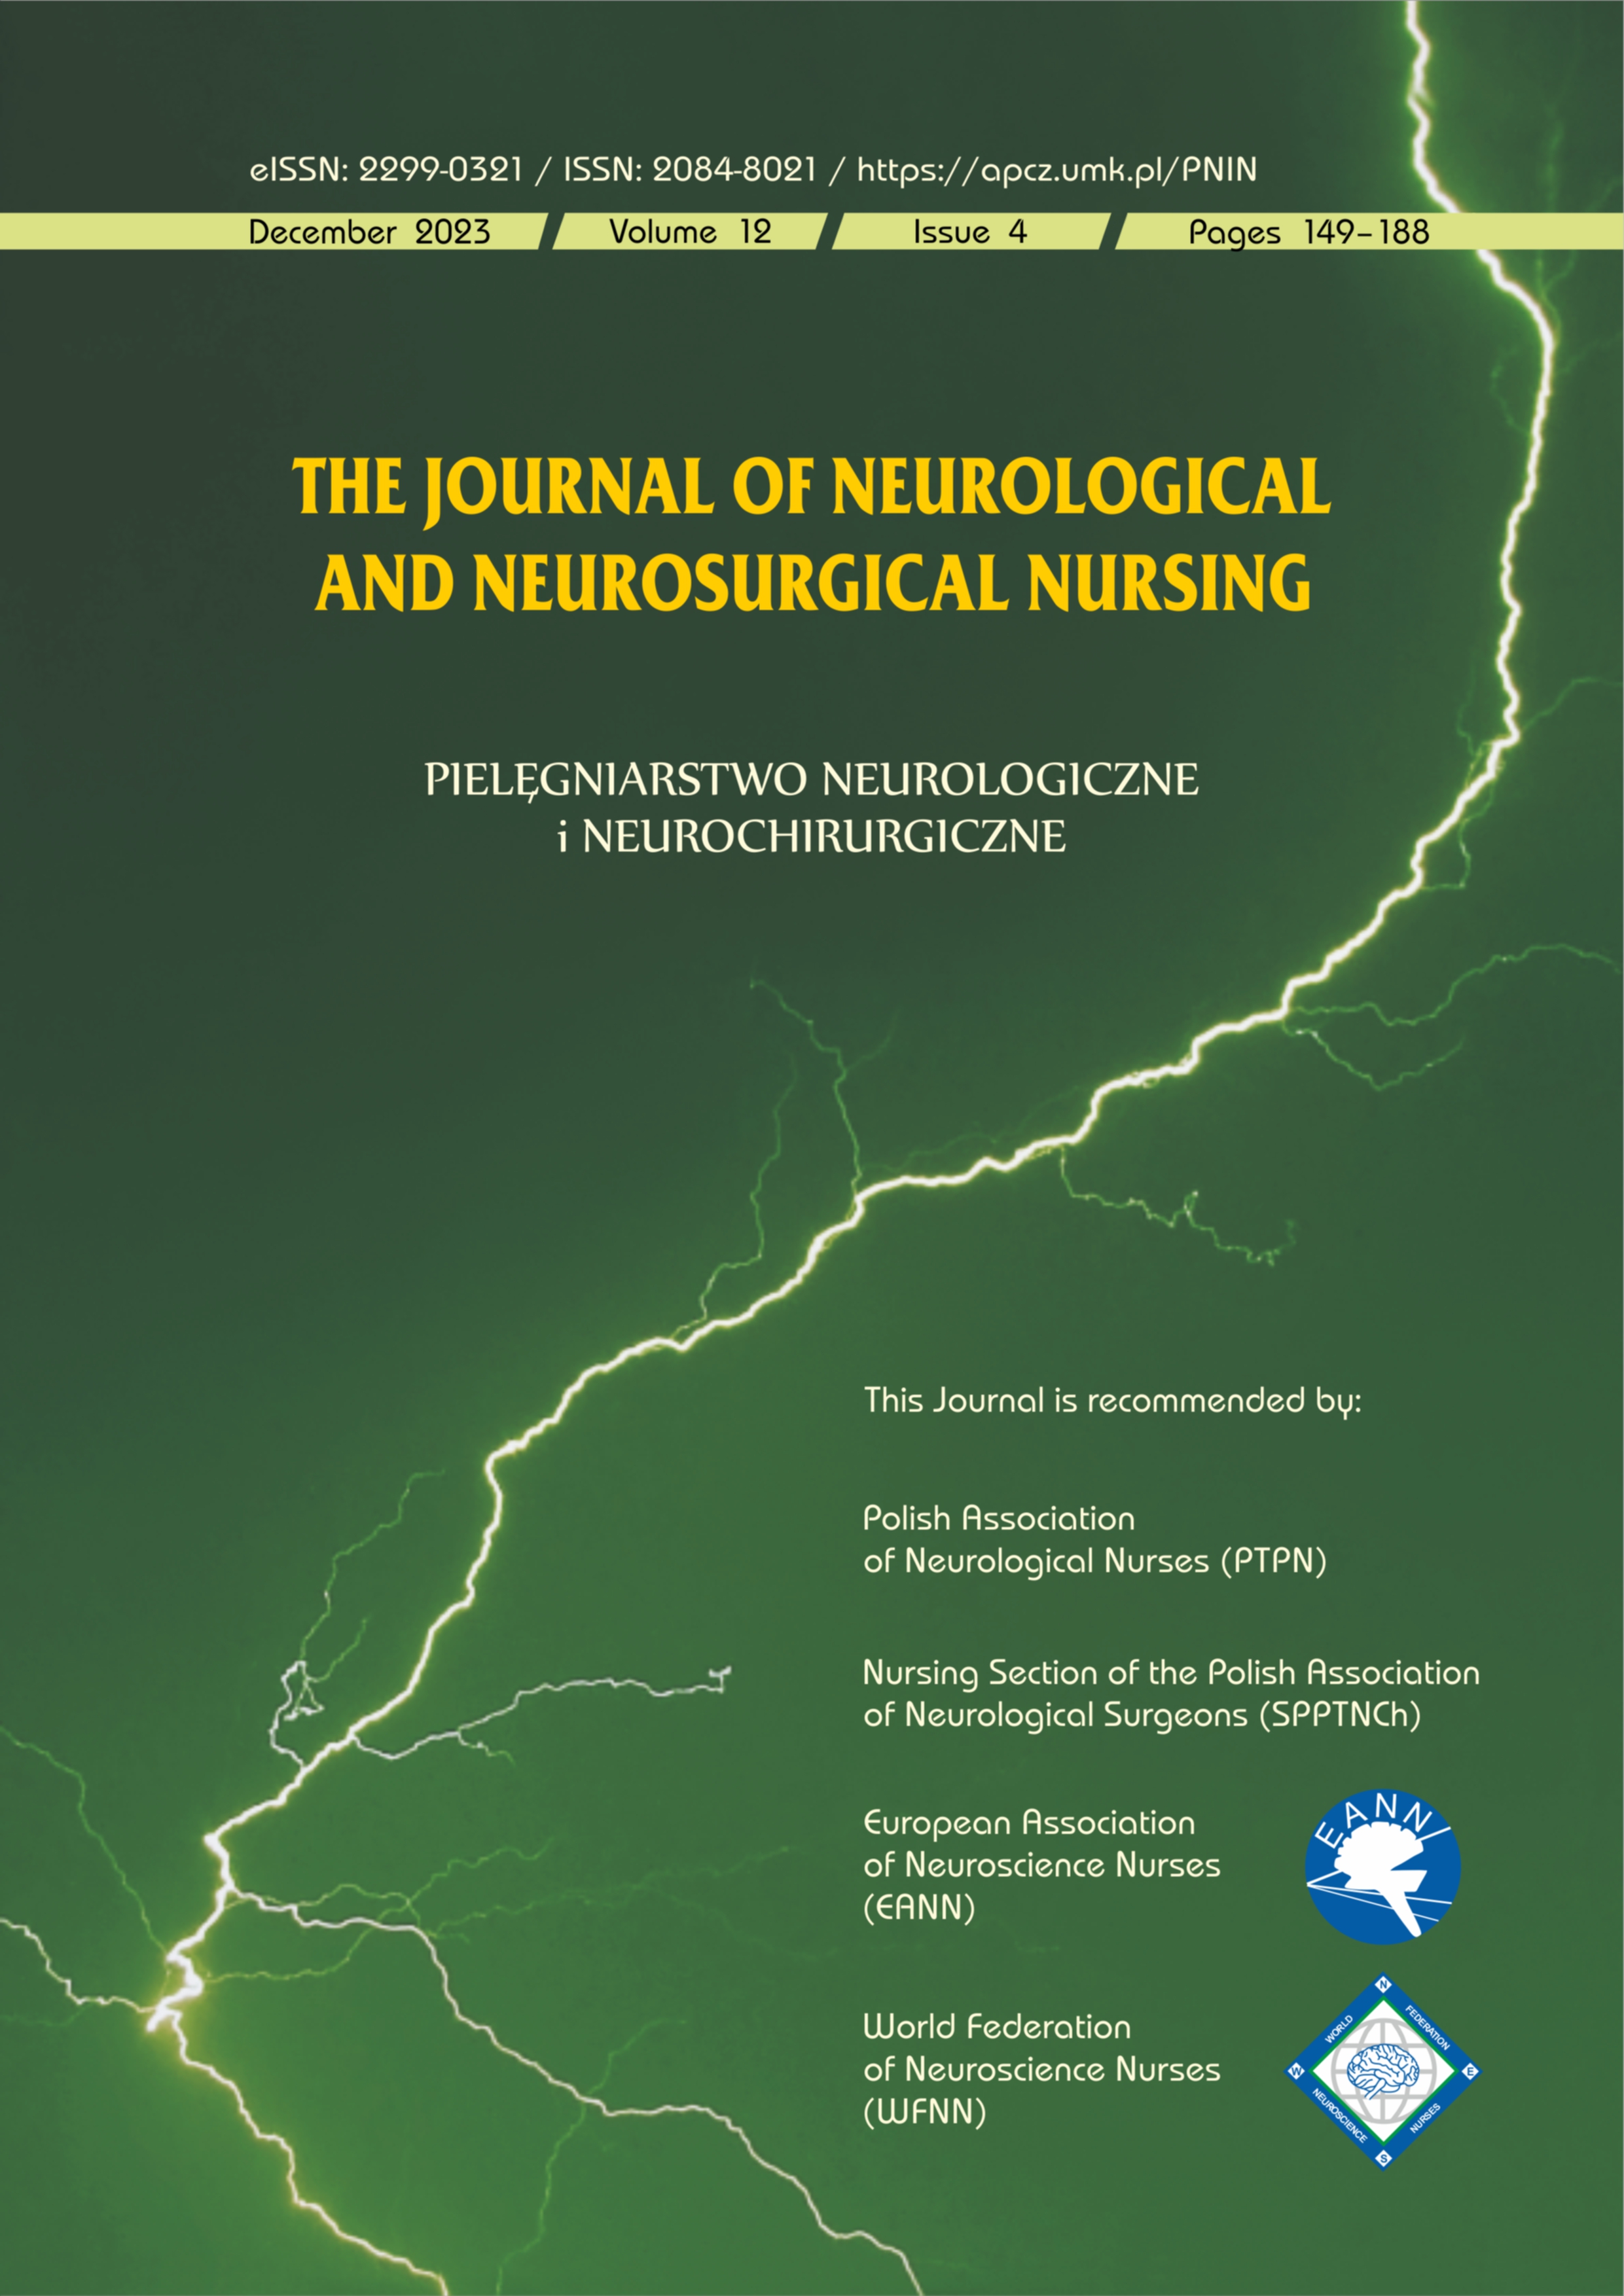 The Journal of Neurological and Neurosurgical Nursing